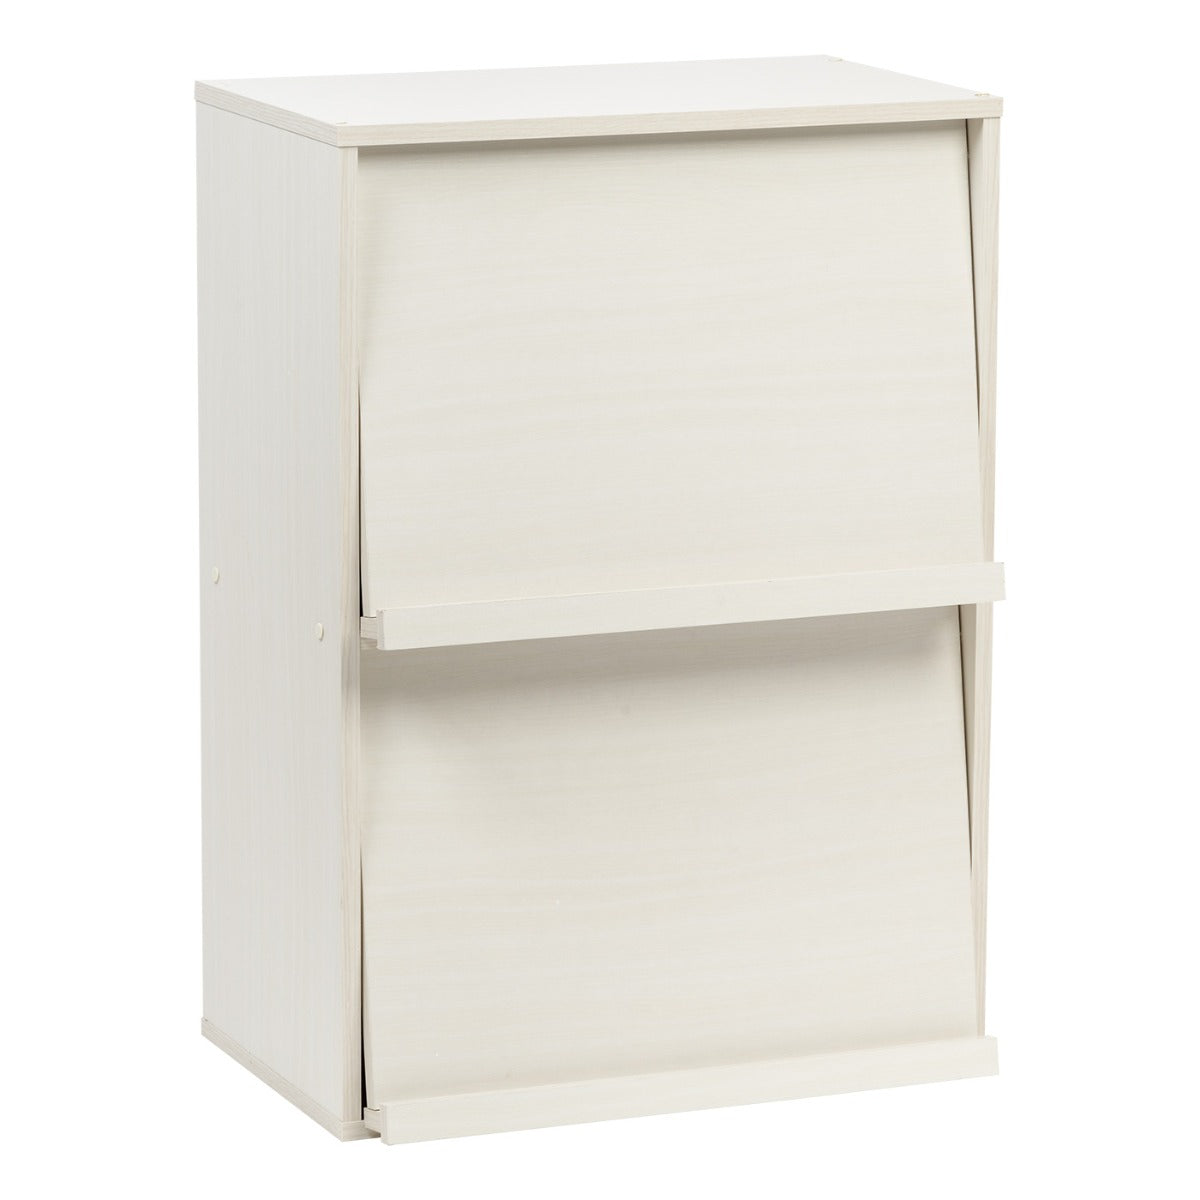 2-Tier Wood Shelf with Pocket Doors, Off White, Collan Series